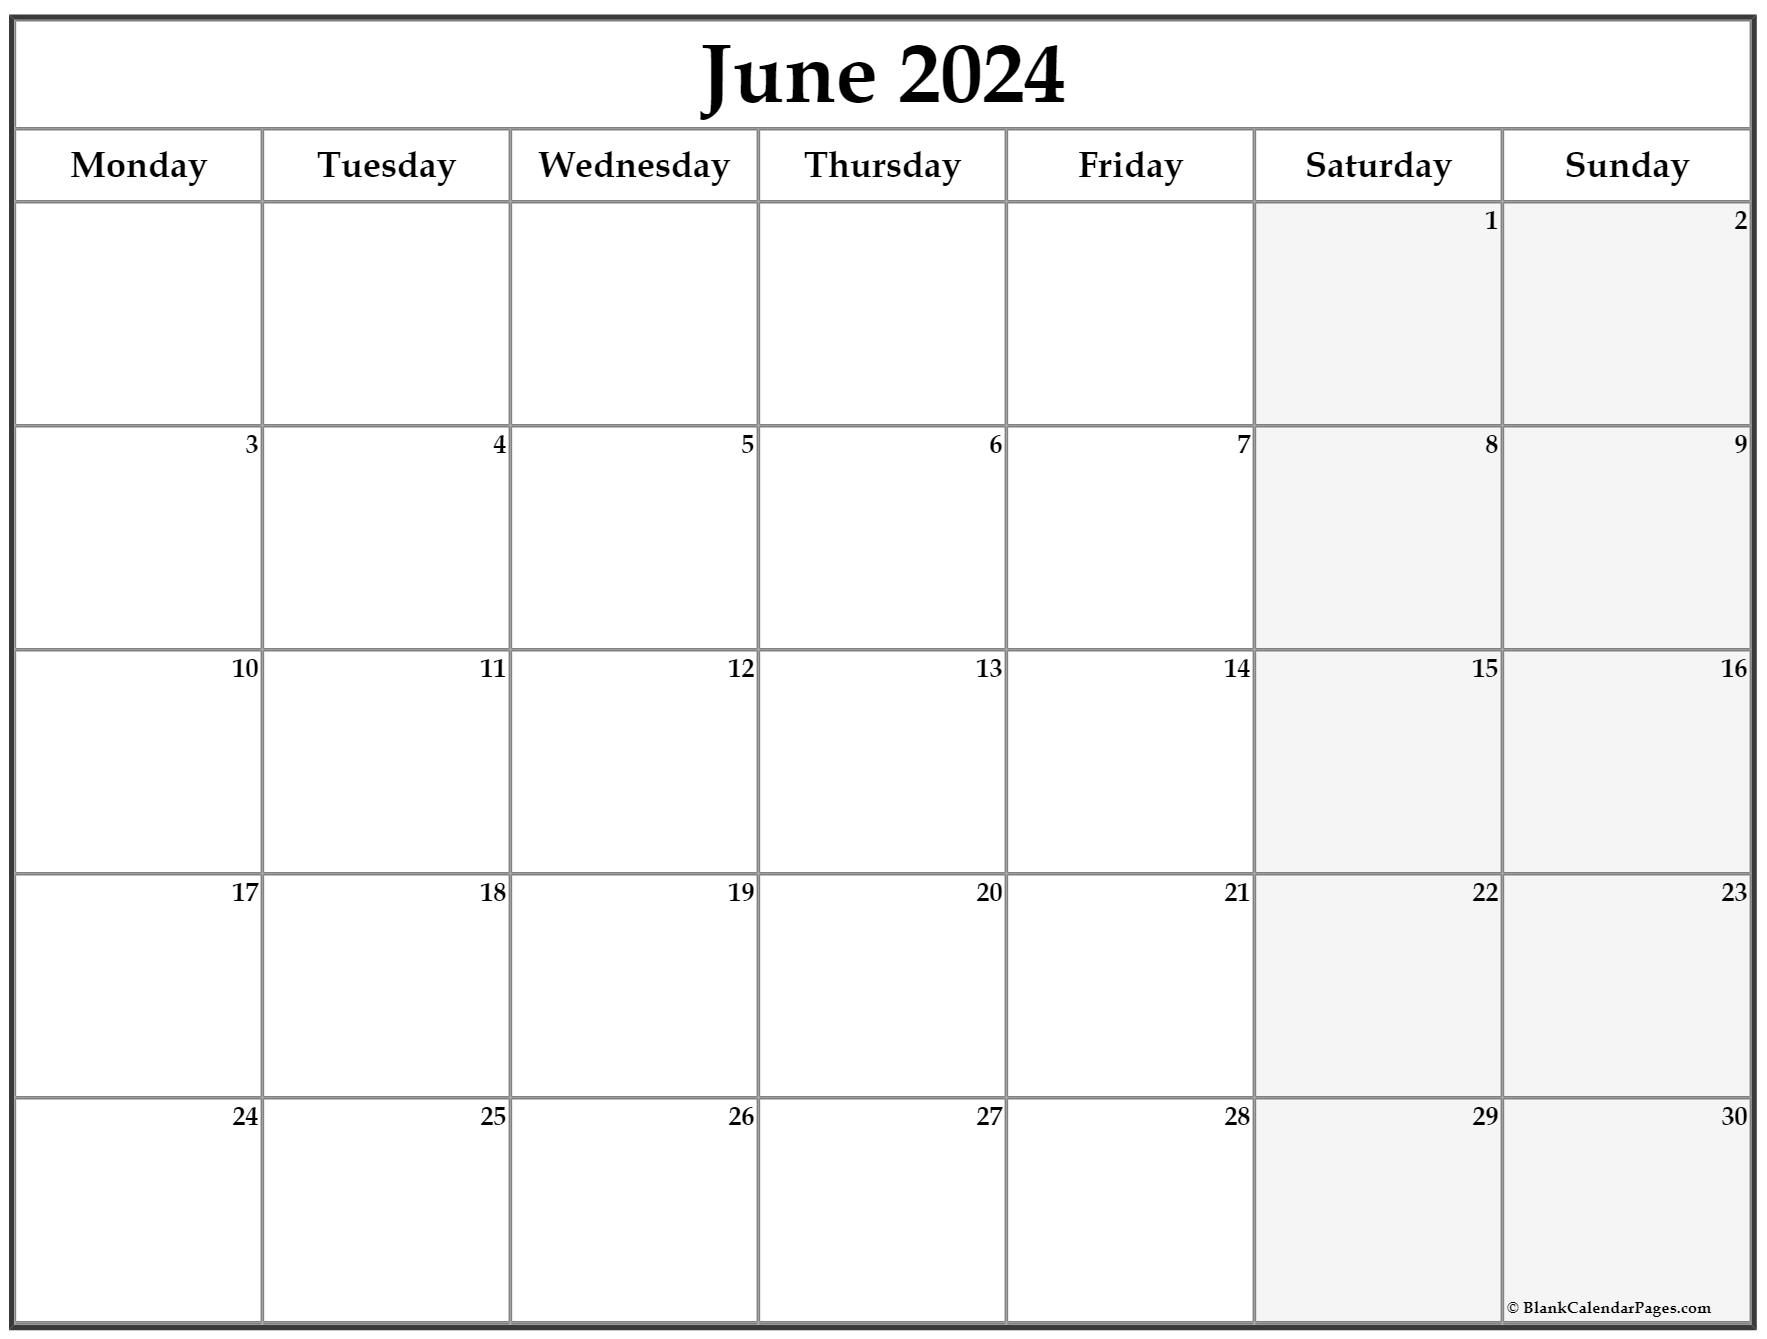 print-free-calendar-2023-simple-calendar-2023-monday-royalty-free-vector-image-2023